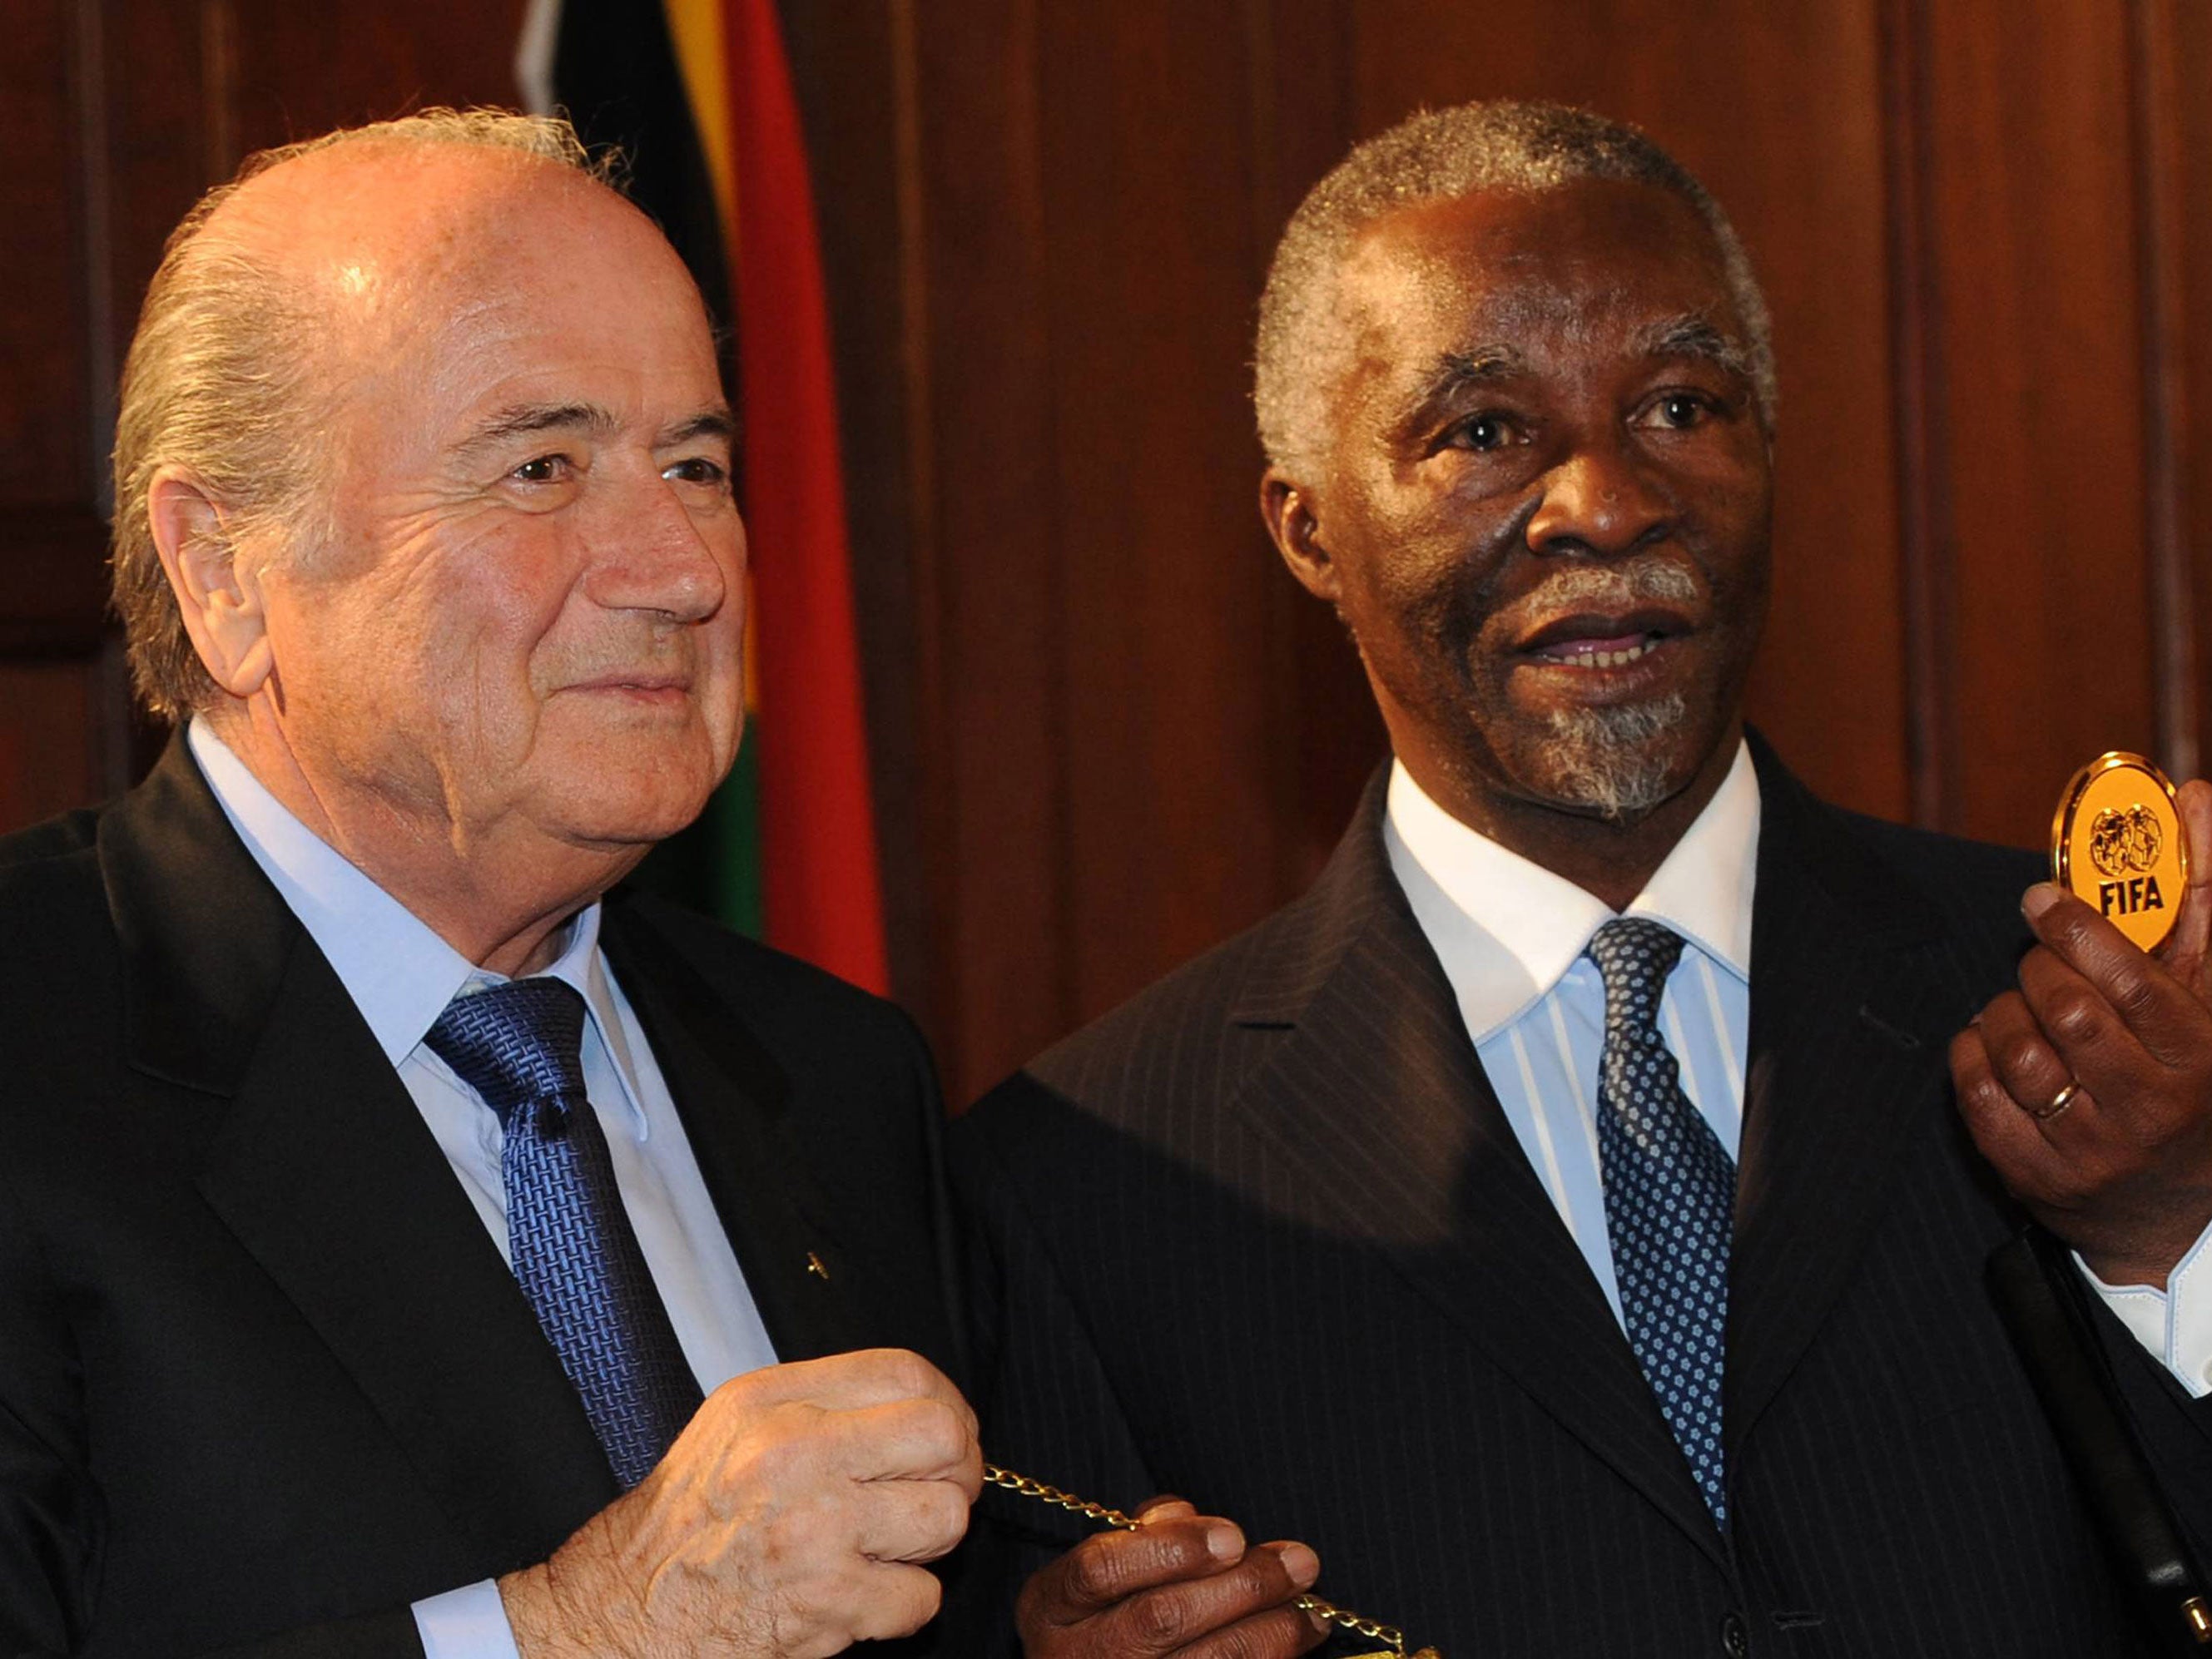 Fifa President Sepp Blatter with South African President Thabo Mbeki in 2008